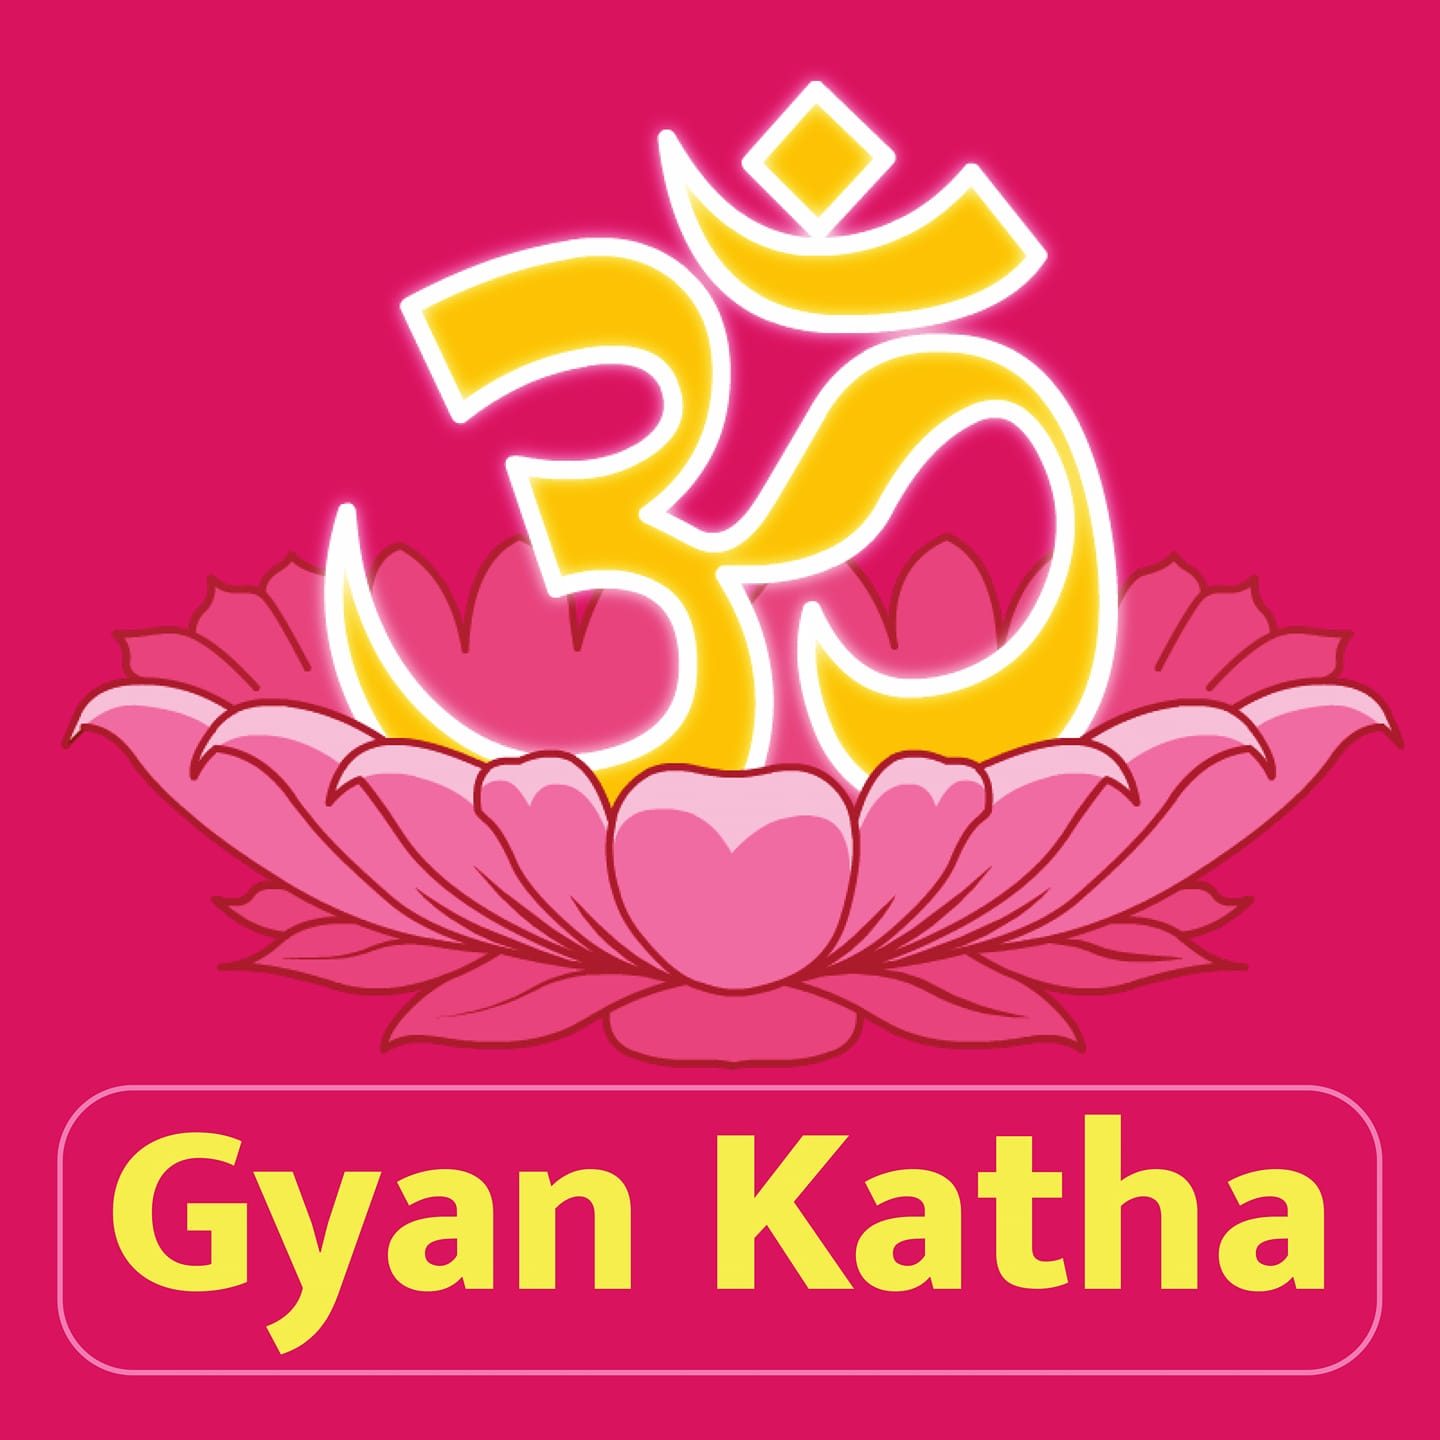 Gyan Katha